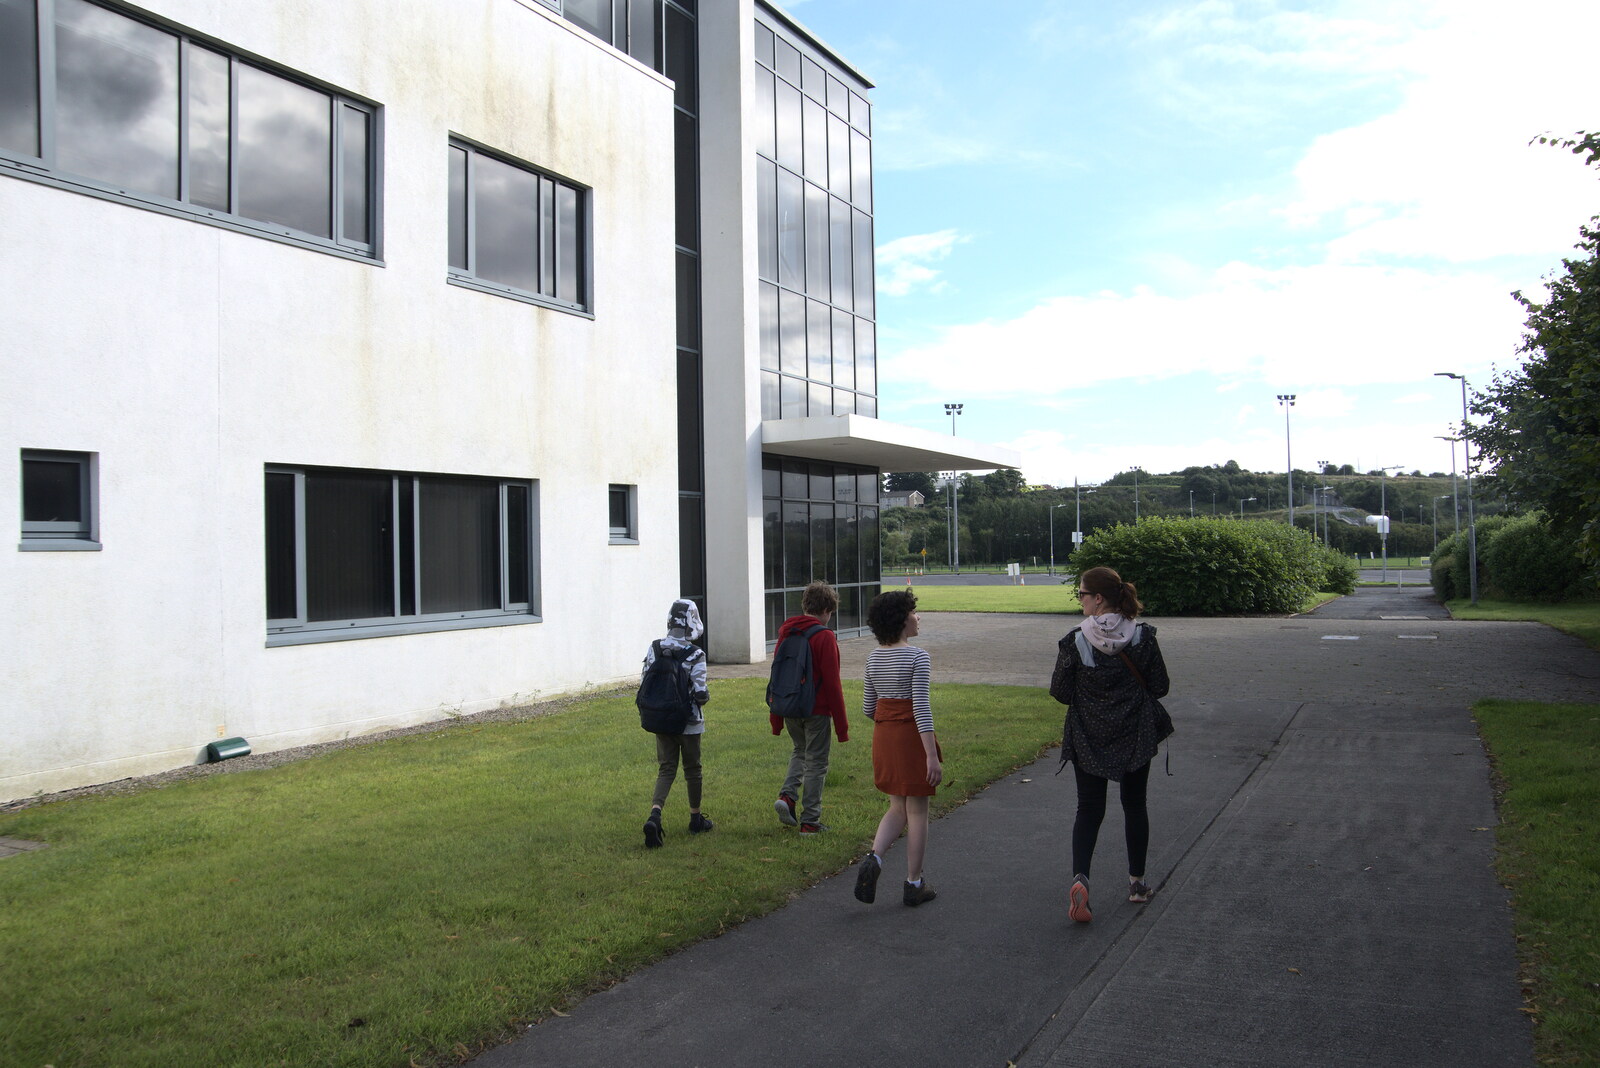 Pints of Guinness and Streedagh Beach, Grange and Sligo, Ireland - 9th August 2021: Wandering through the campus of IT Sligo